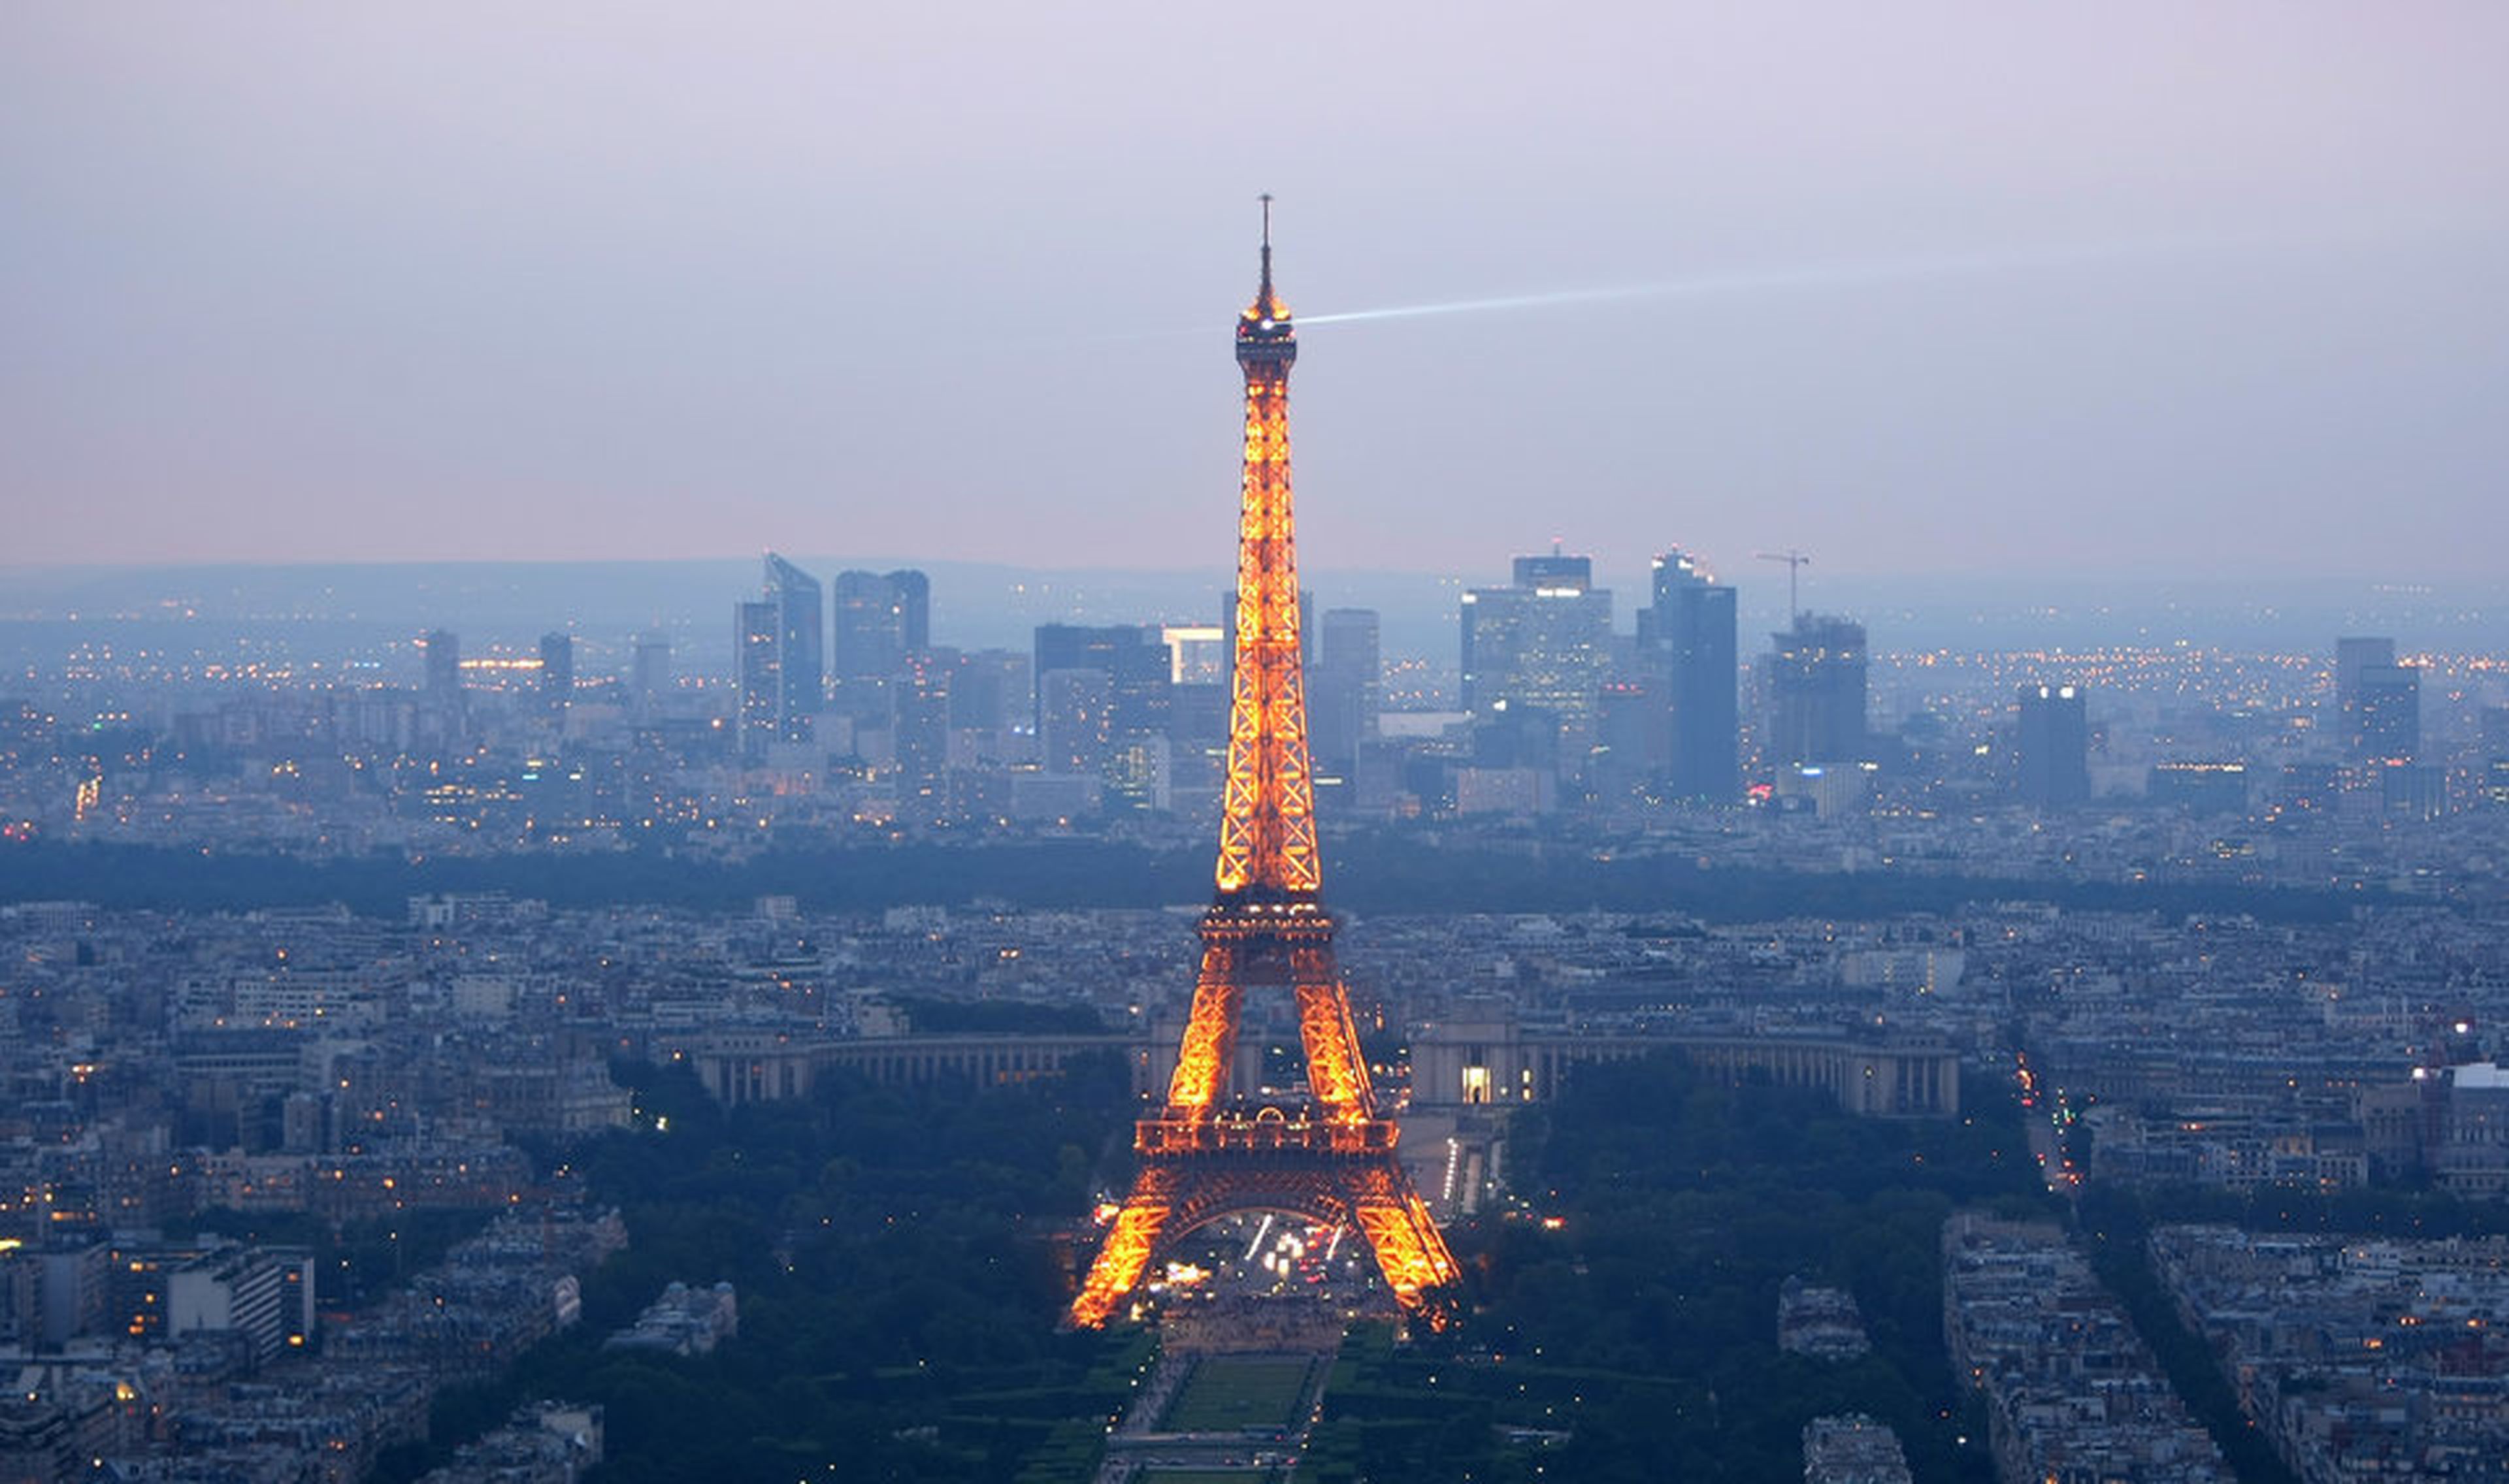 Vista de la Torre Eiffel